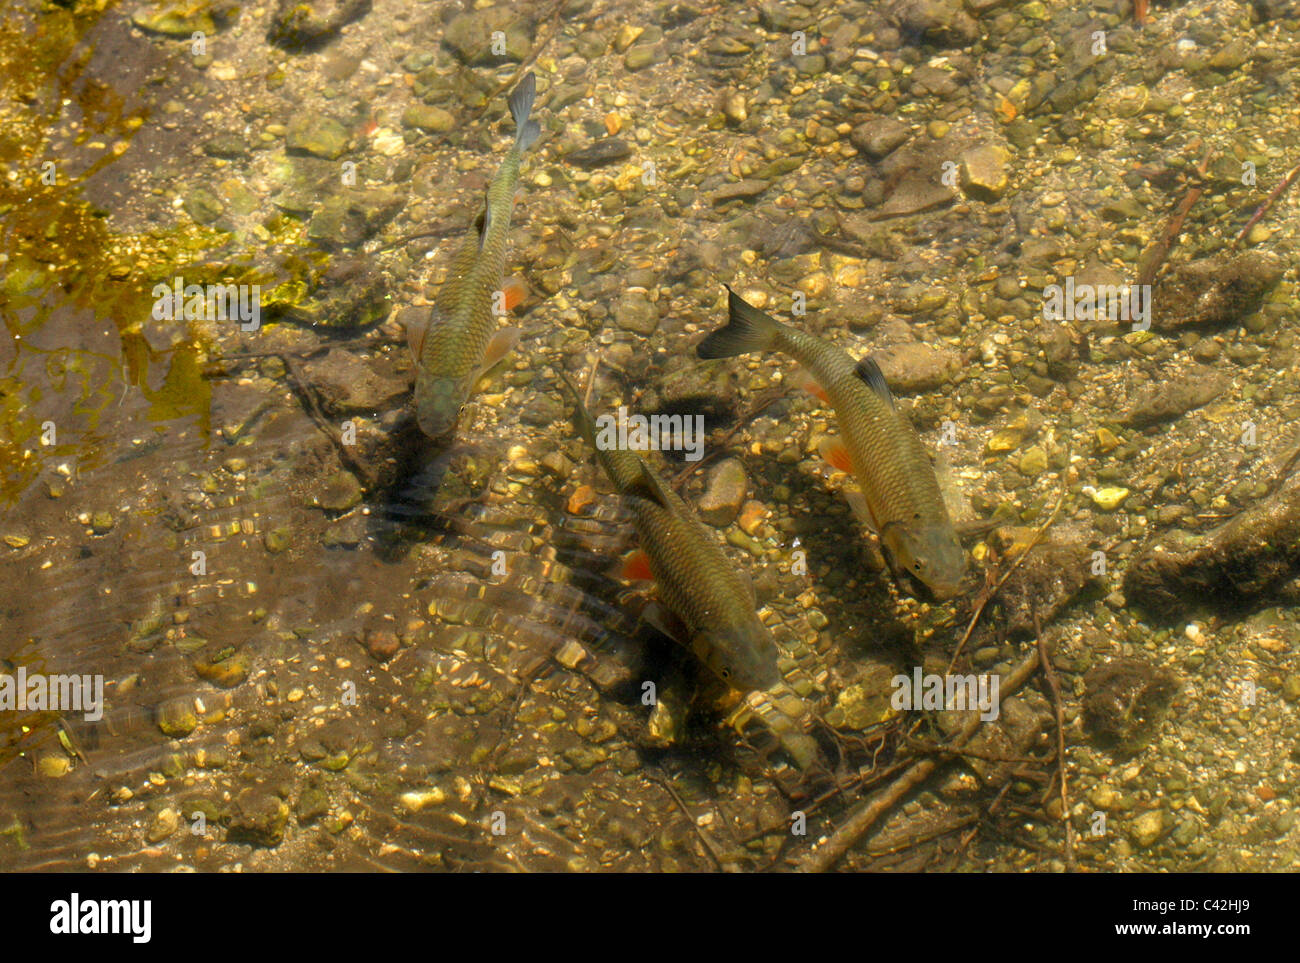 Common Rudd, Scardinius erythrophthalmus, Cyprinidae, Cypriniformes, Chordata. Swimming in the River Chess, Hertfordshire. Stock Photo